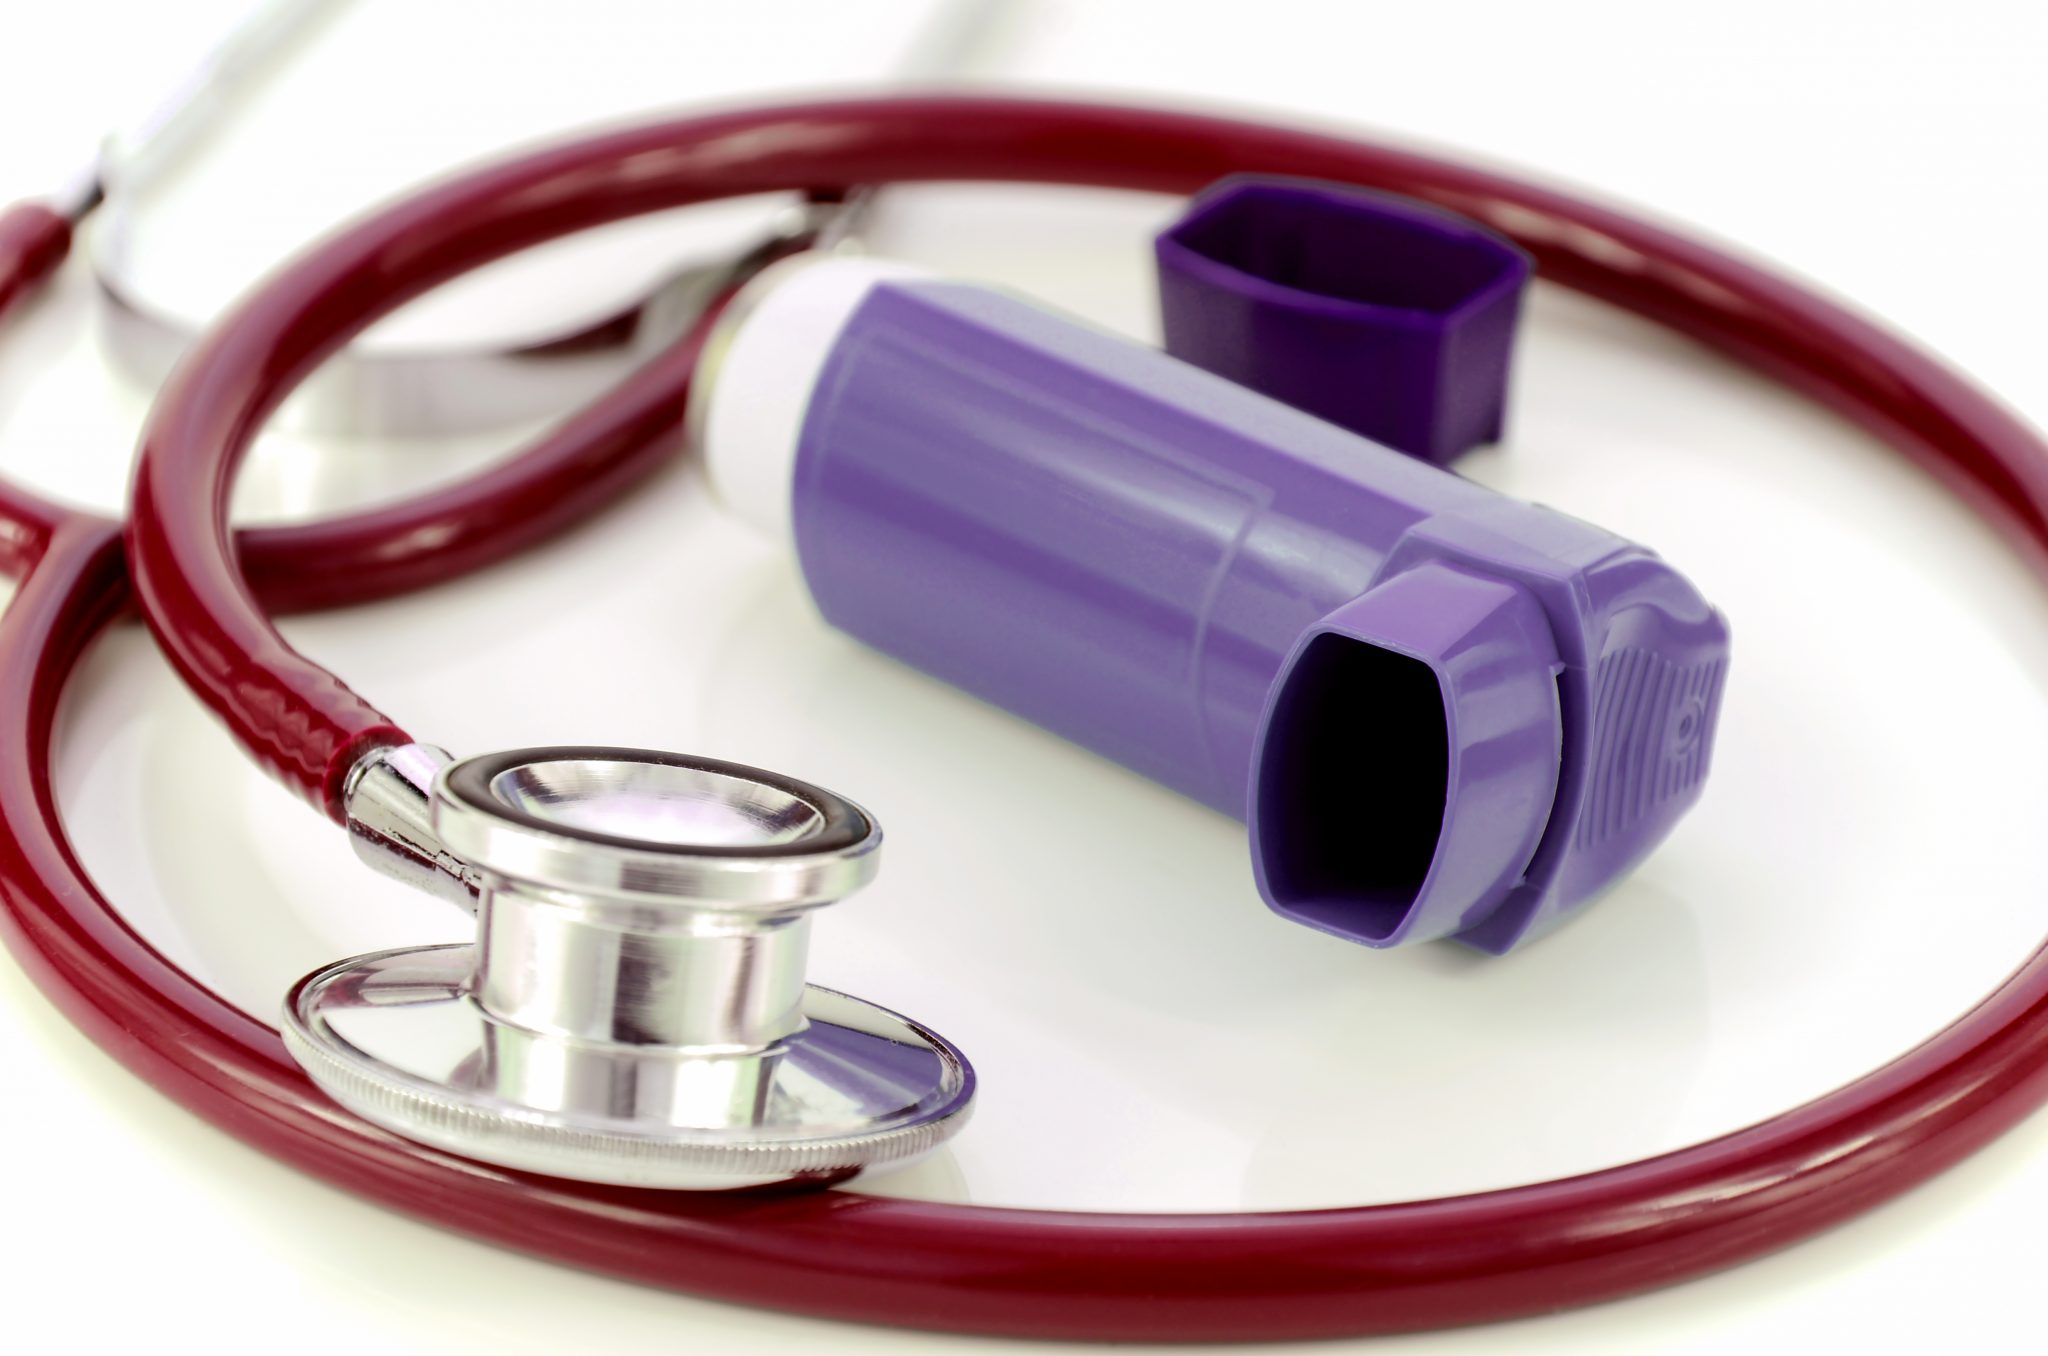 asthma inhaler and stethoscope